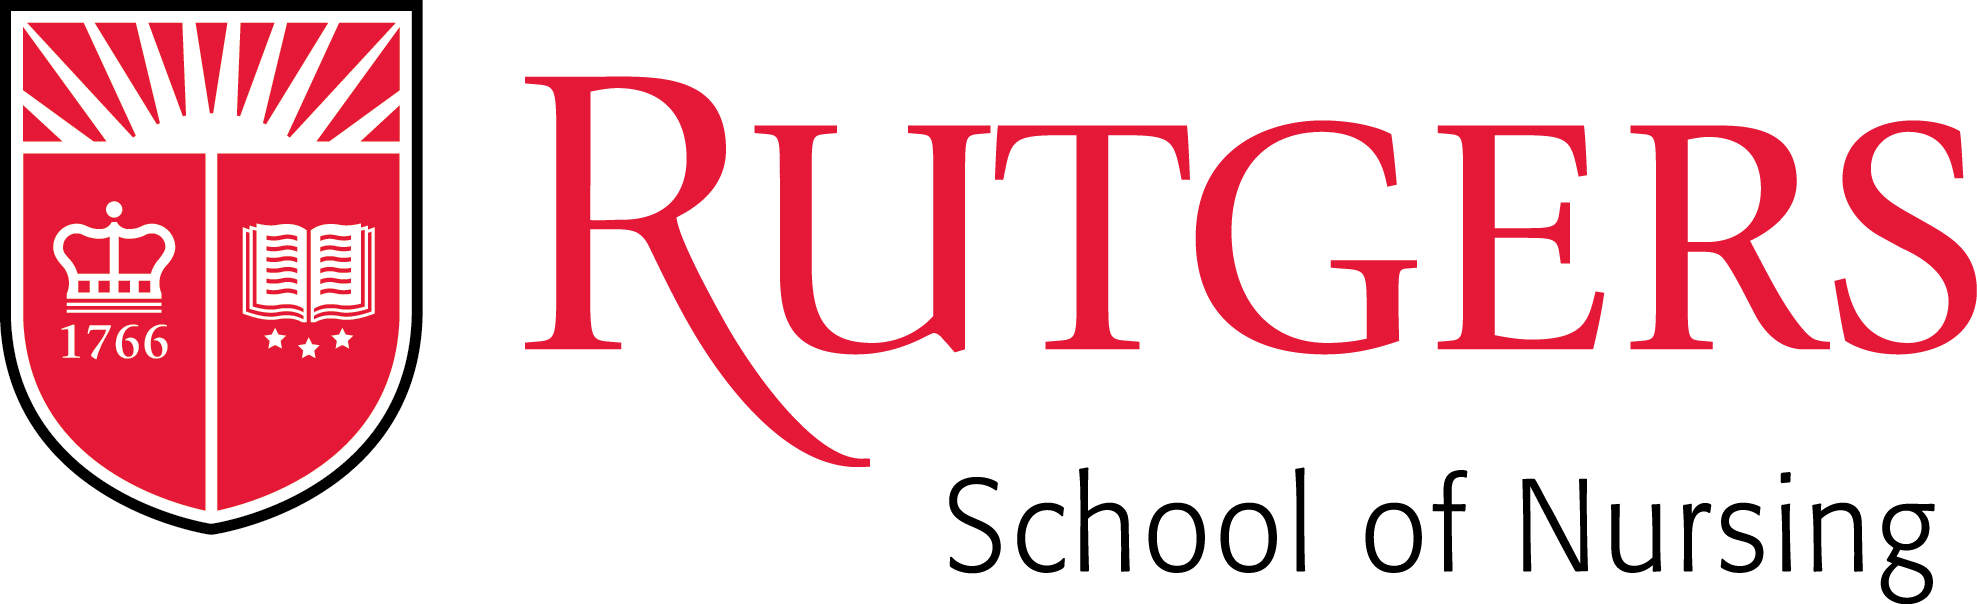 Rutgers Schoolof Nursing Logo PNG